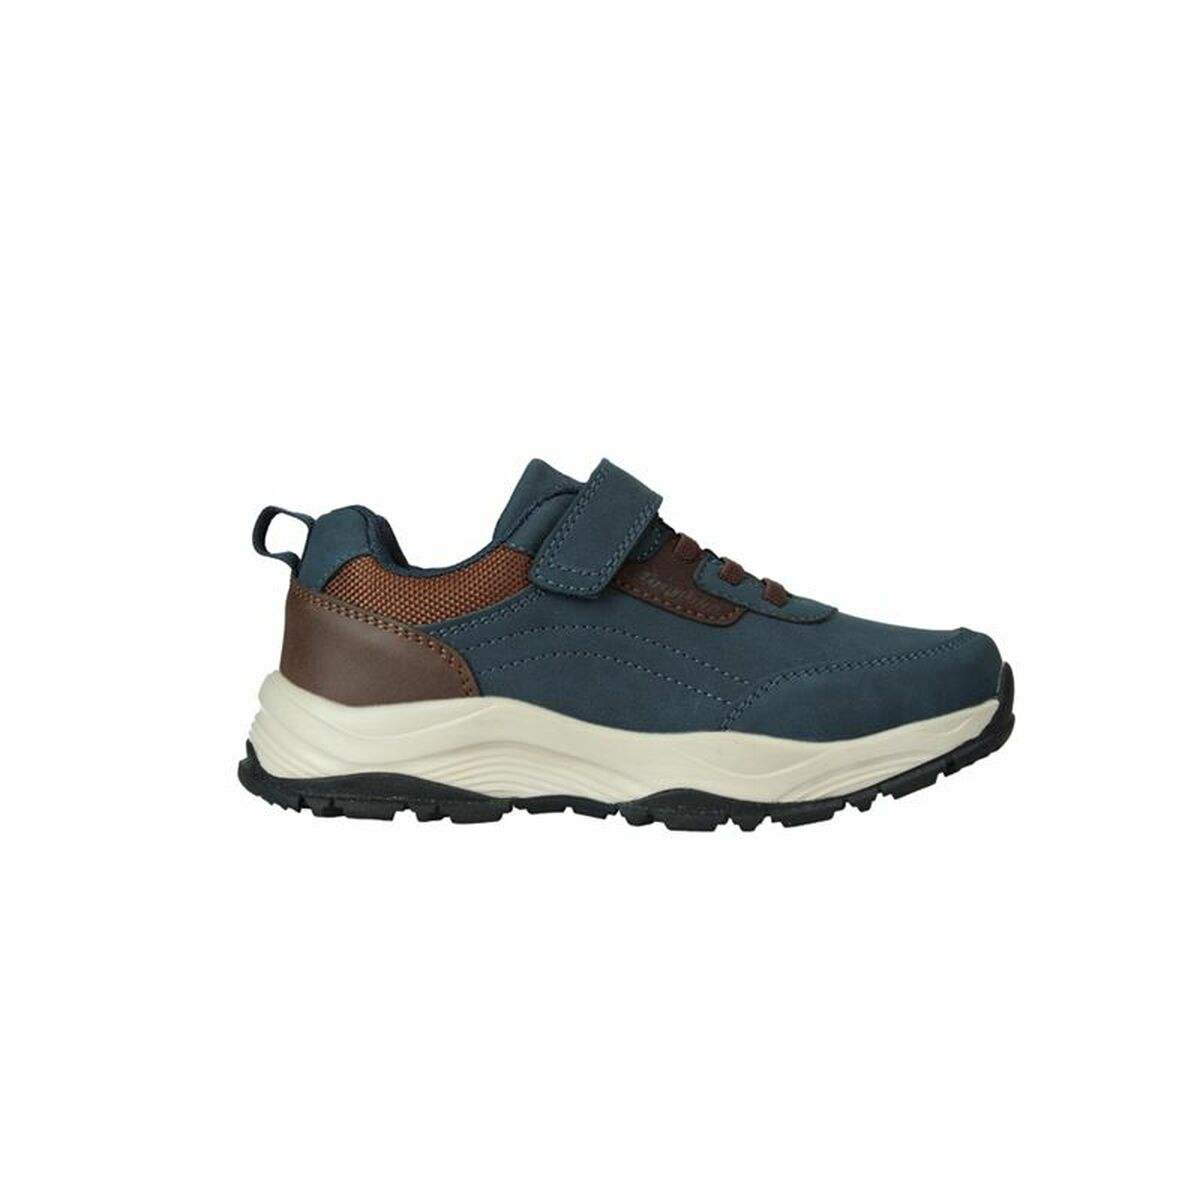 Chaussures de Sport pour Homme J-Hayber Chimo Navy Bleu - J-Hayber - Jardin D'Eyden - jardindeyden.fr